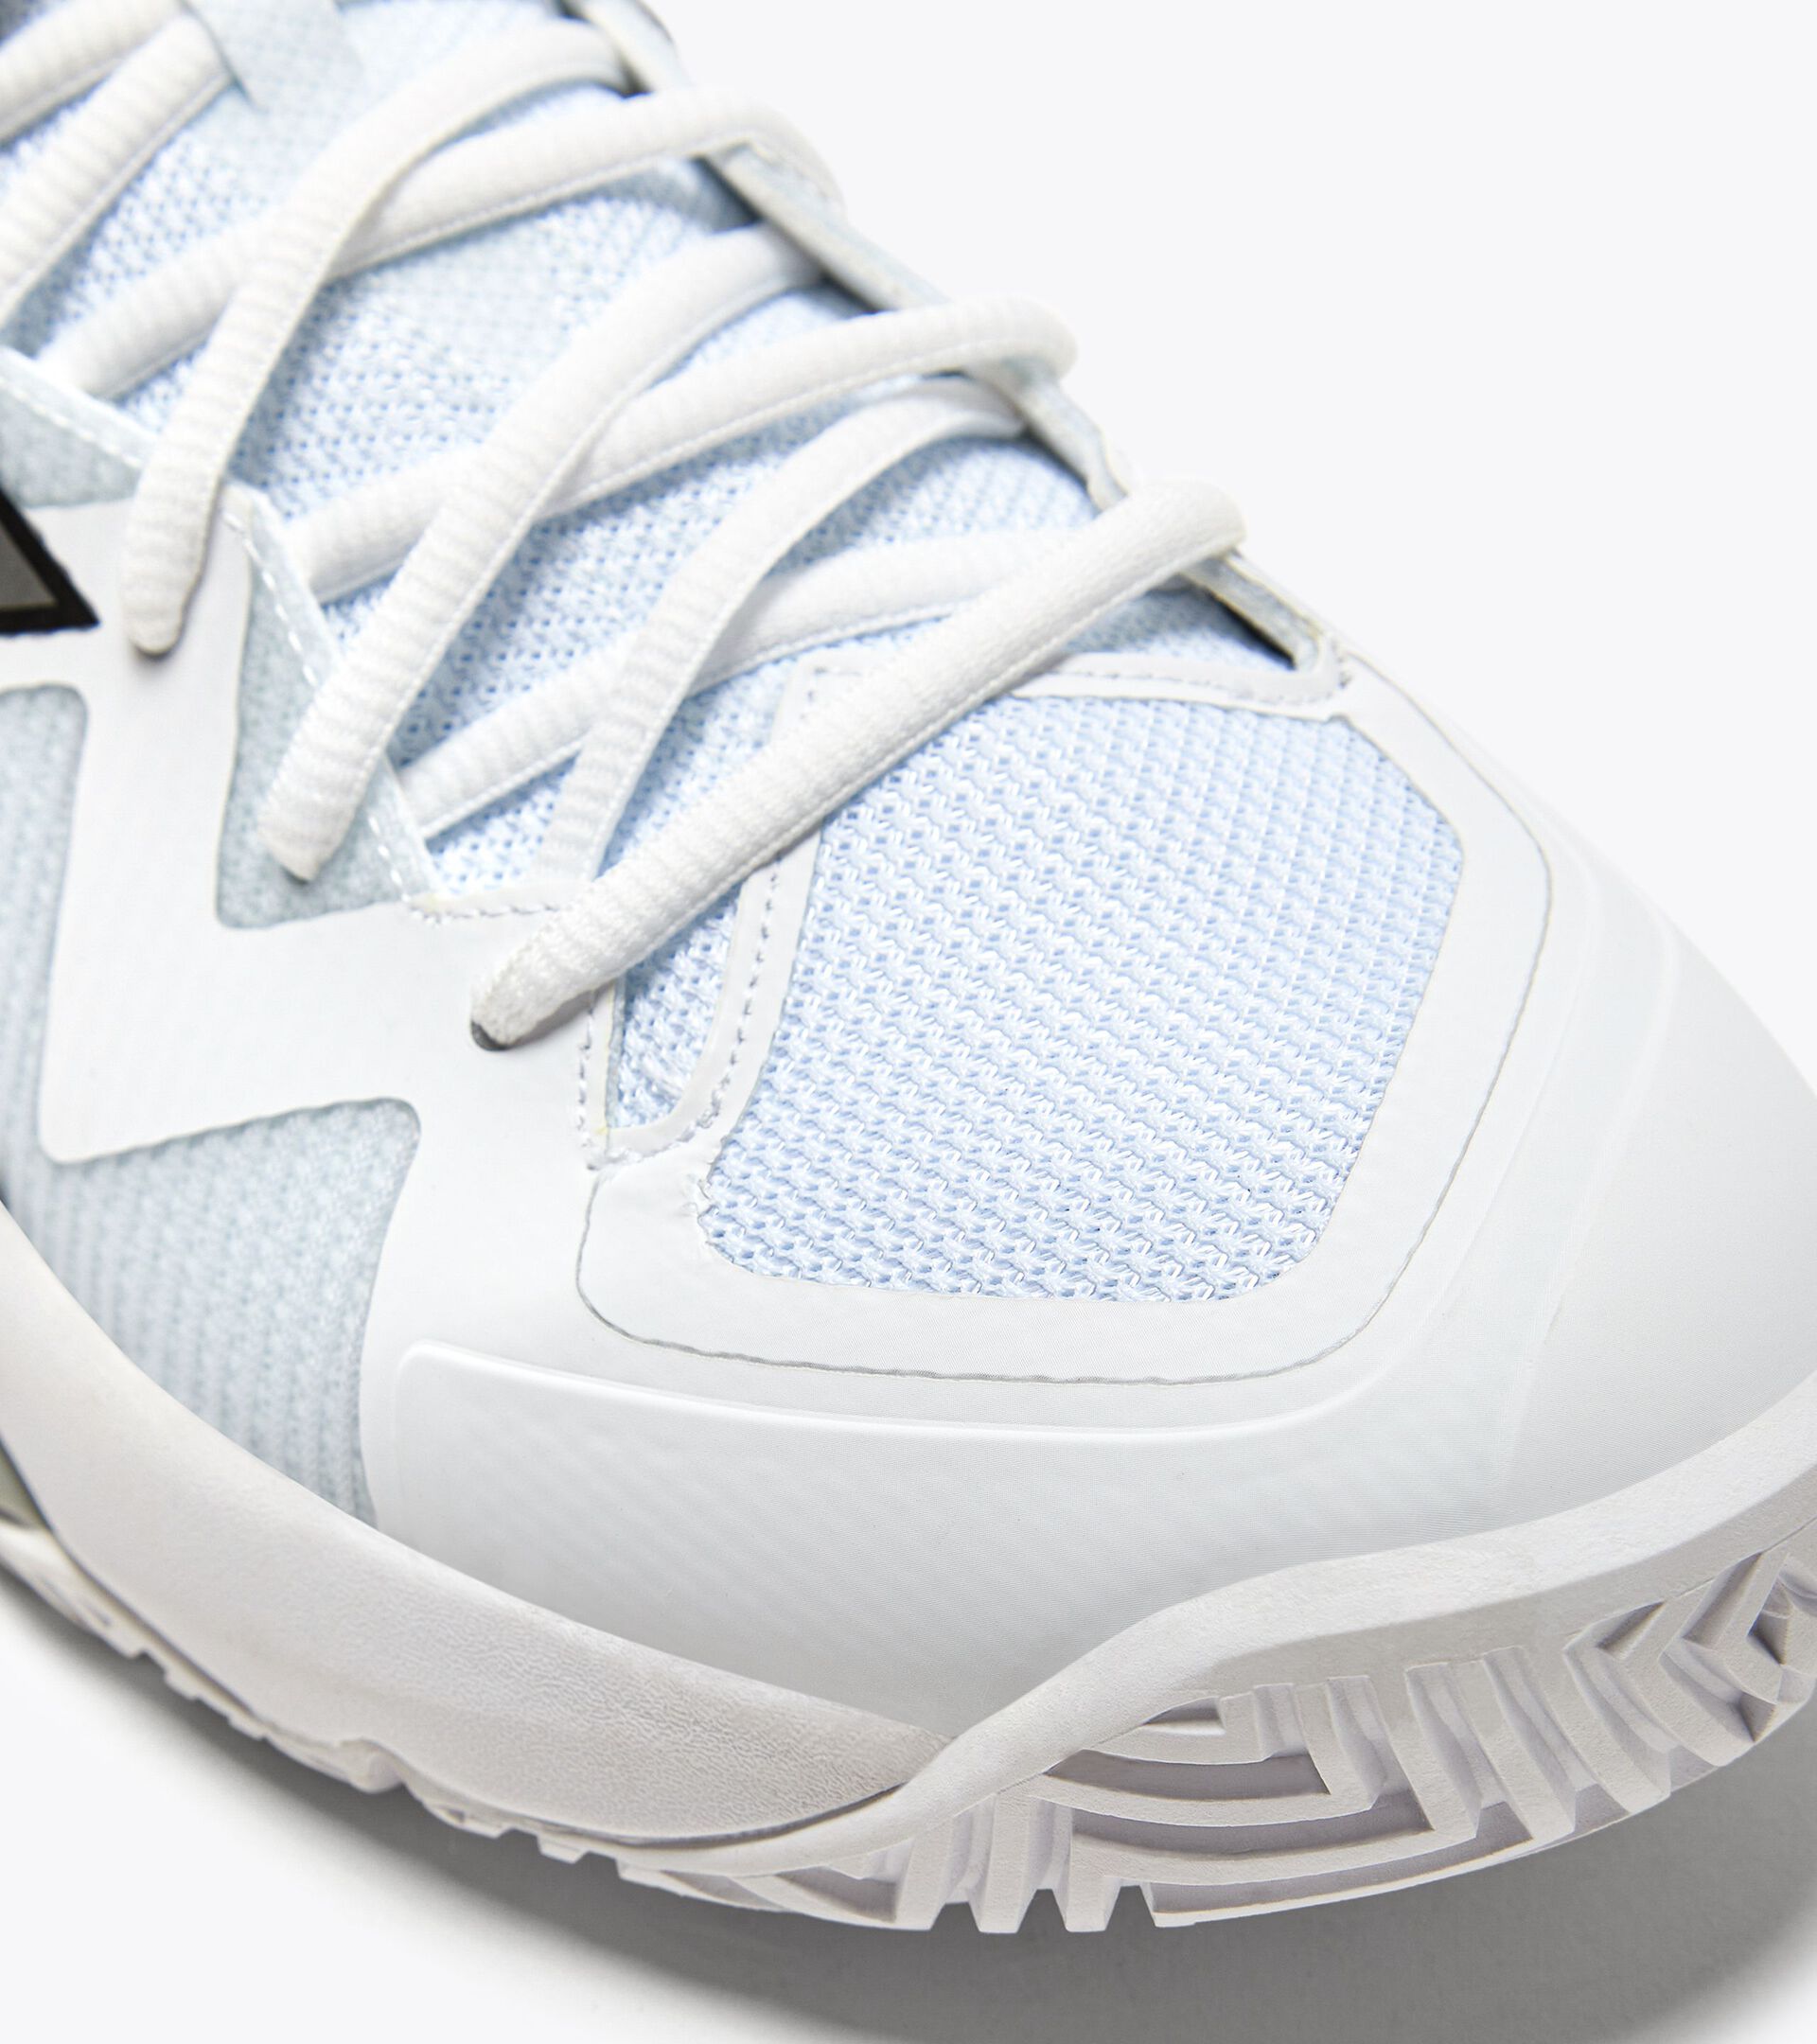 Zapatillas de tenis para terrenos duros o de tierra batida - Hombre  B.ICON 2 AG BLANCO/PLATA  (C6103) - Diadora